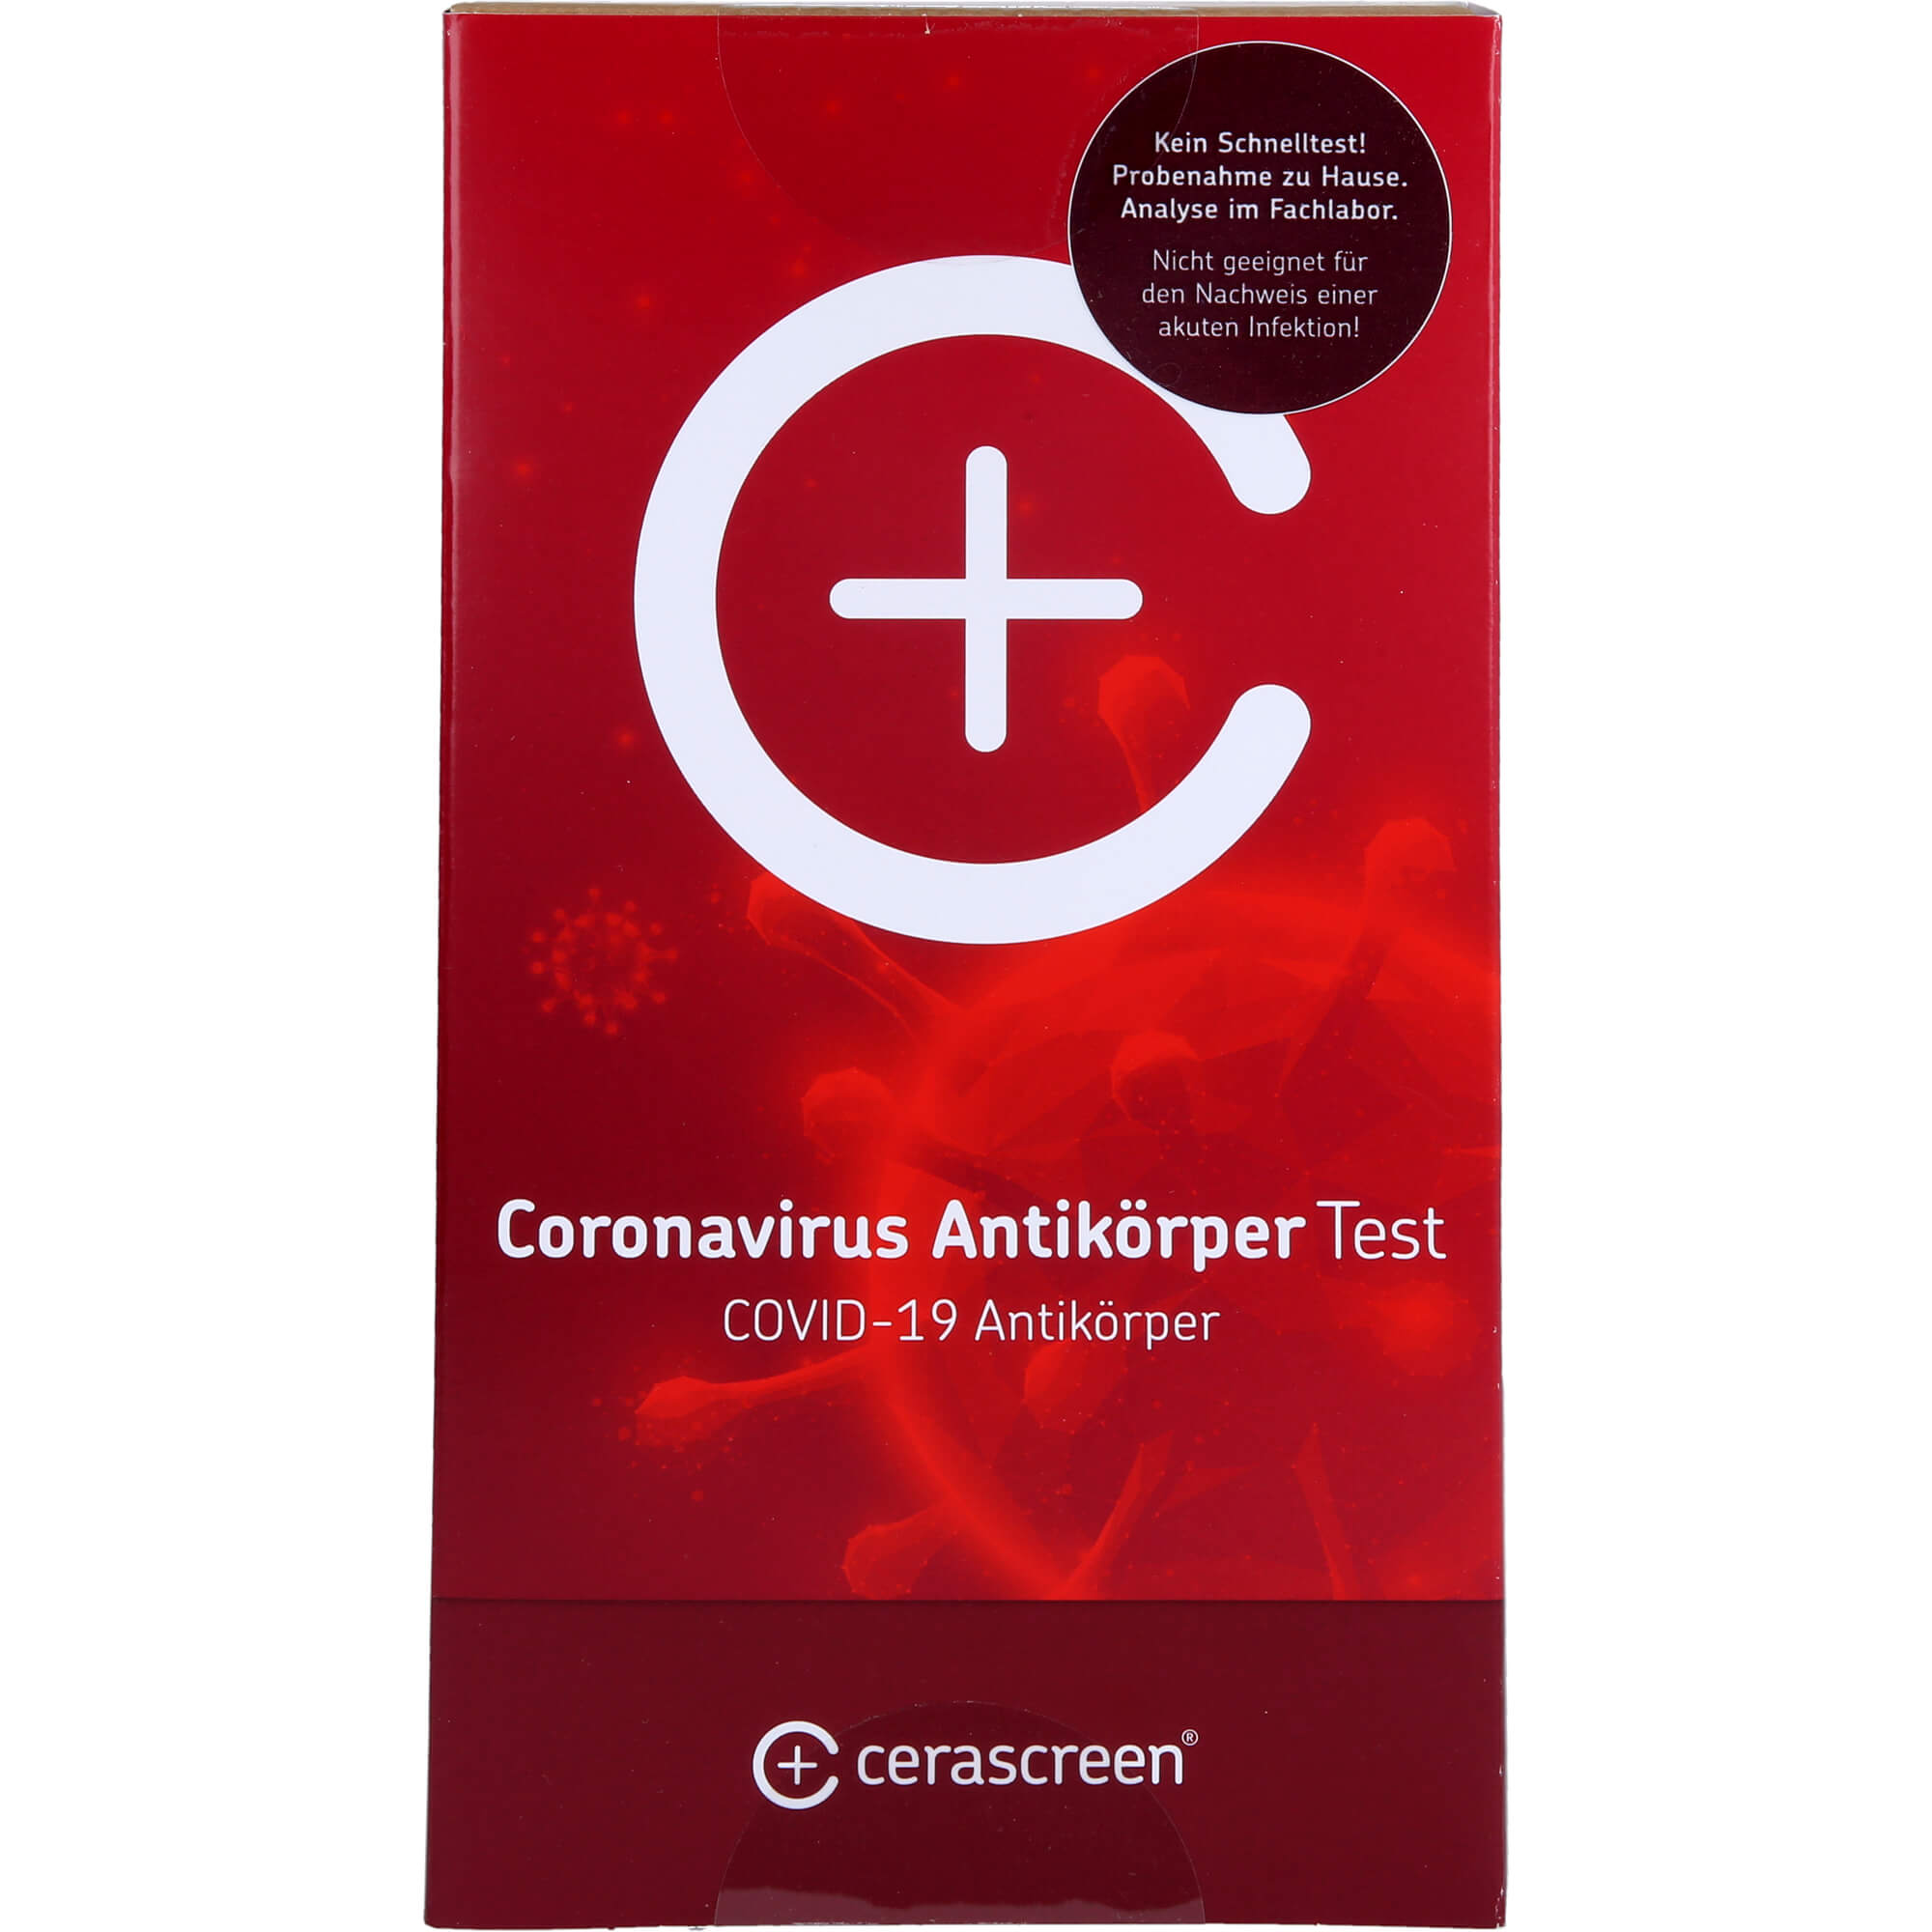 CERASCREEN Coronavirus Antikörper Test zum Einsenden 